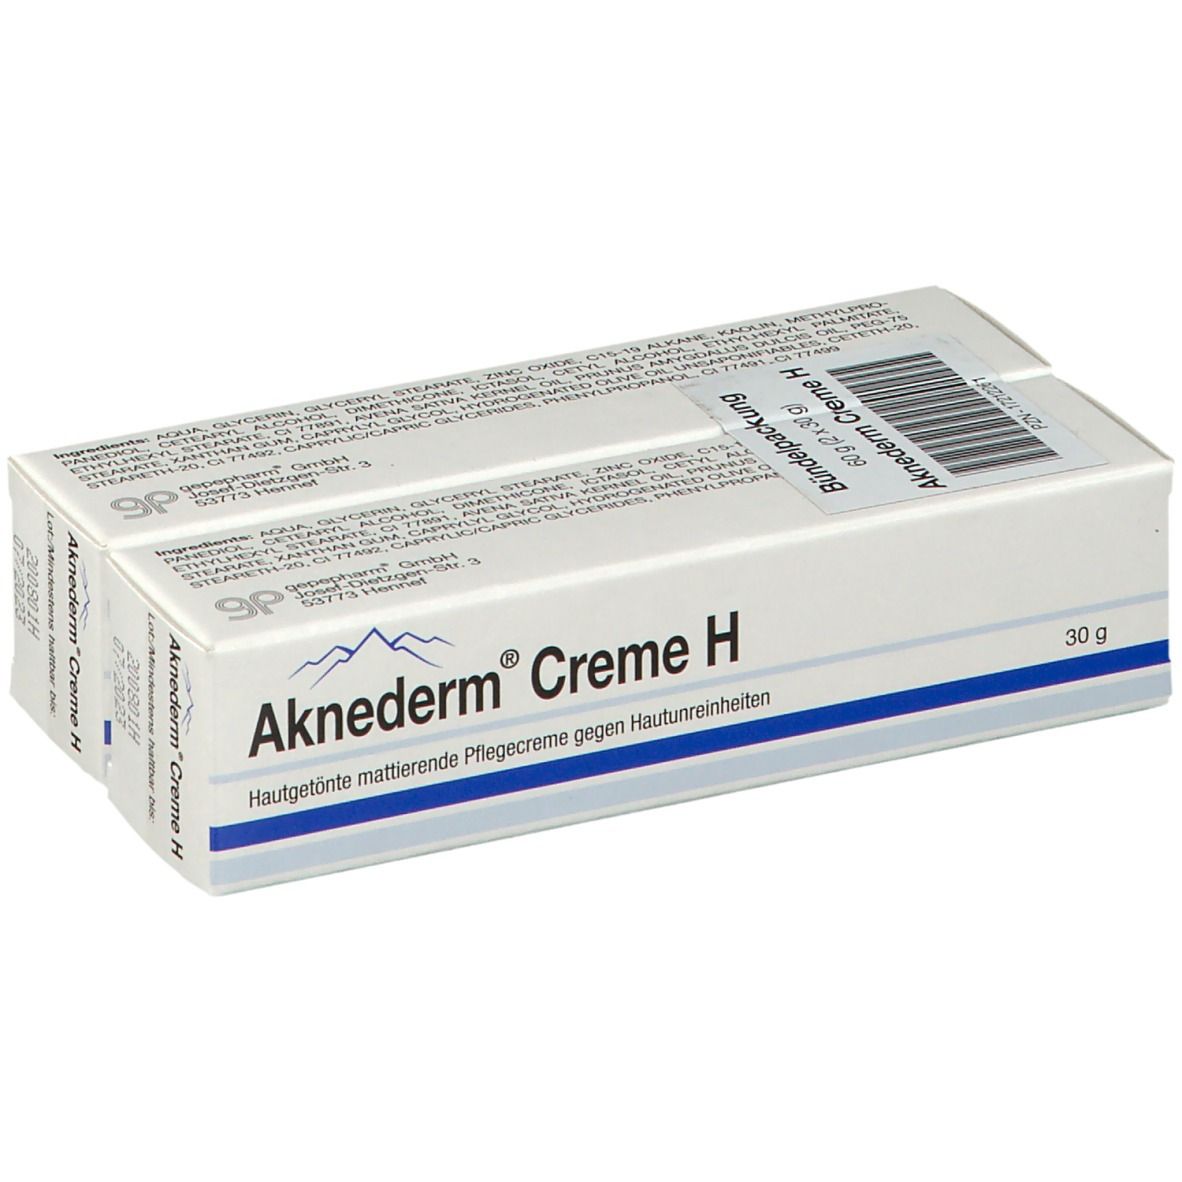 Aknederm® Creme H